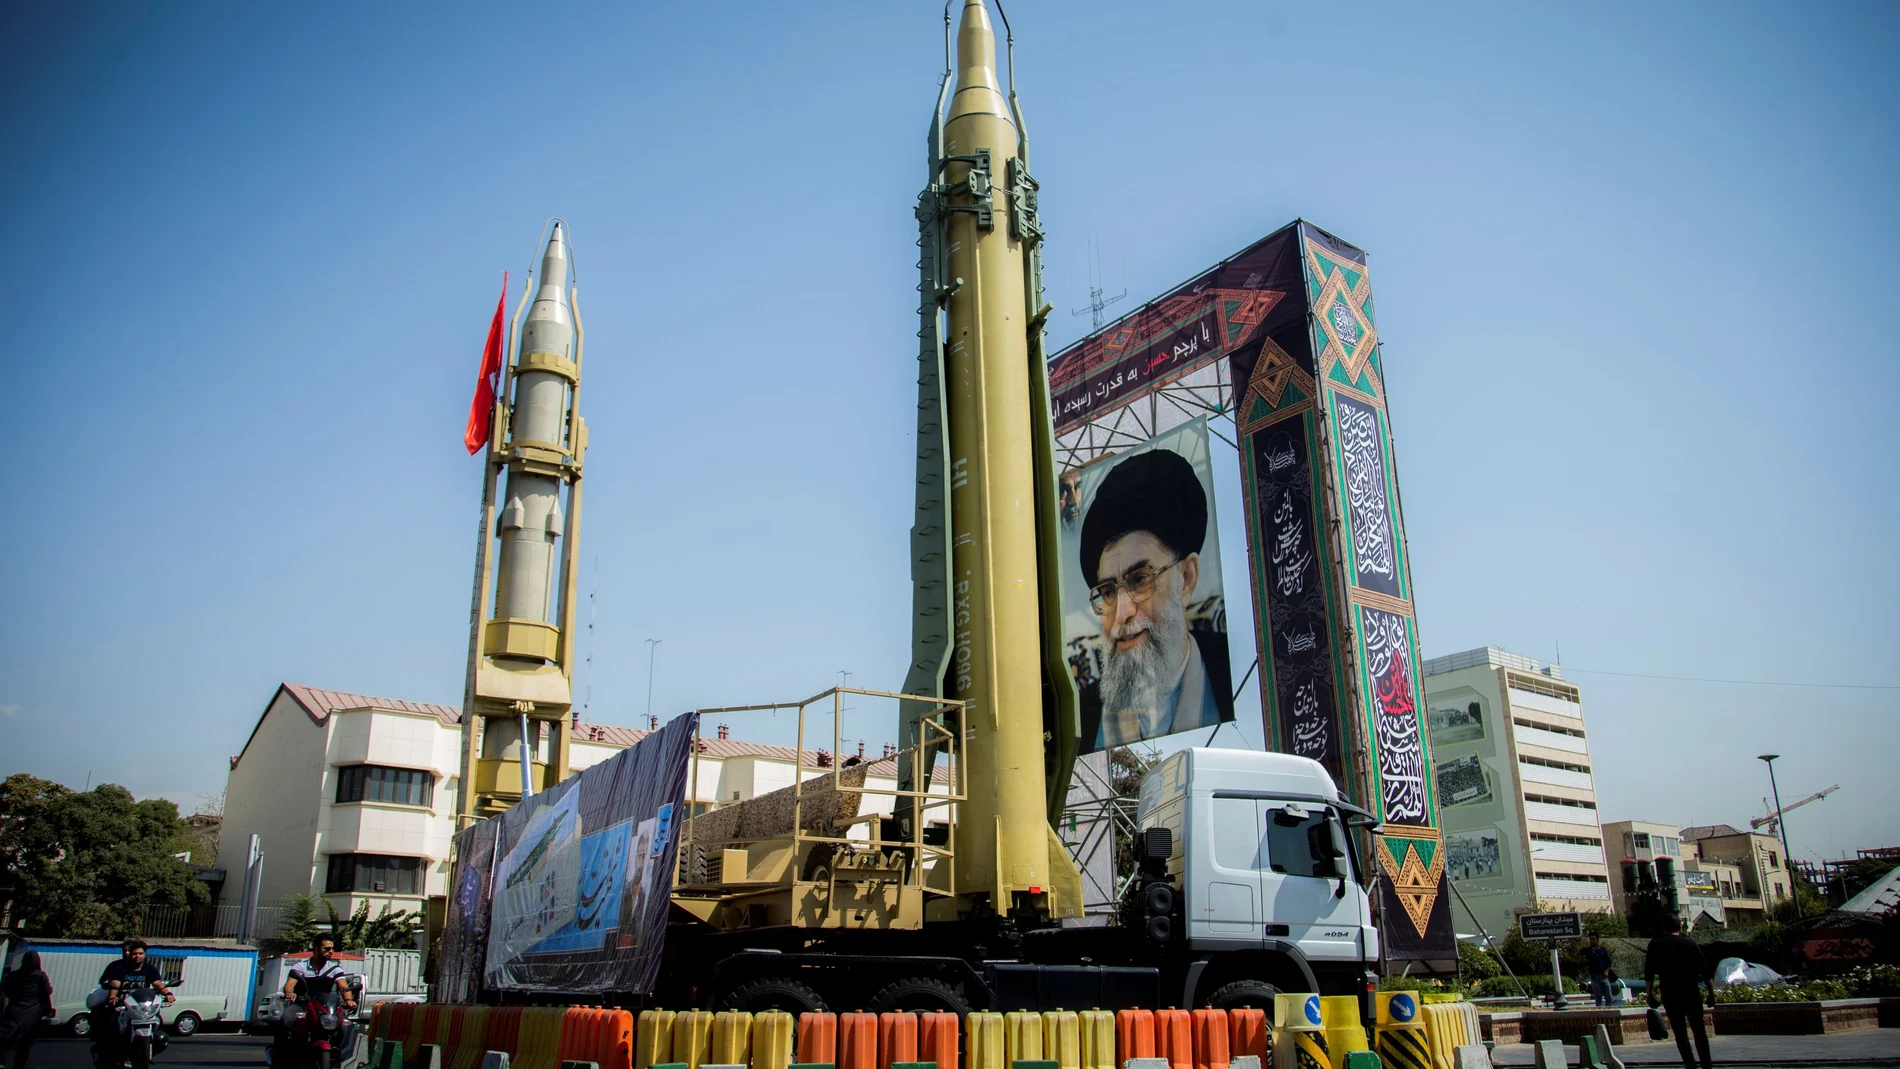 FILE PHOTO: Supreme leader display seen at Baharestan Square in Tehran